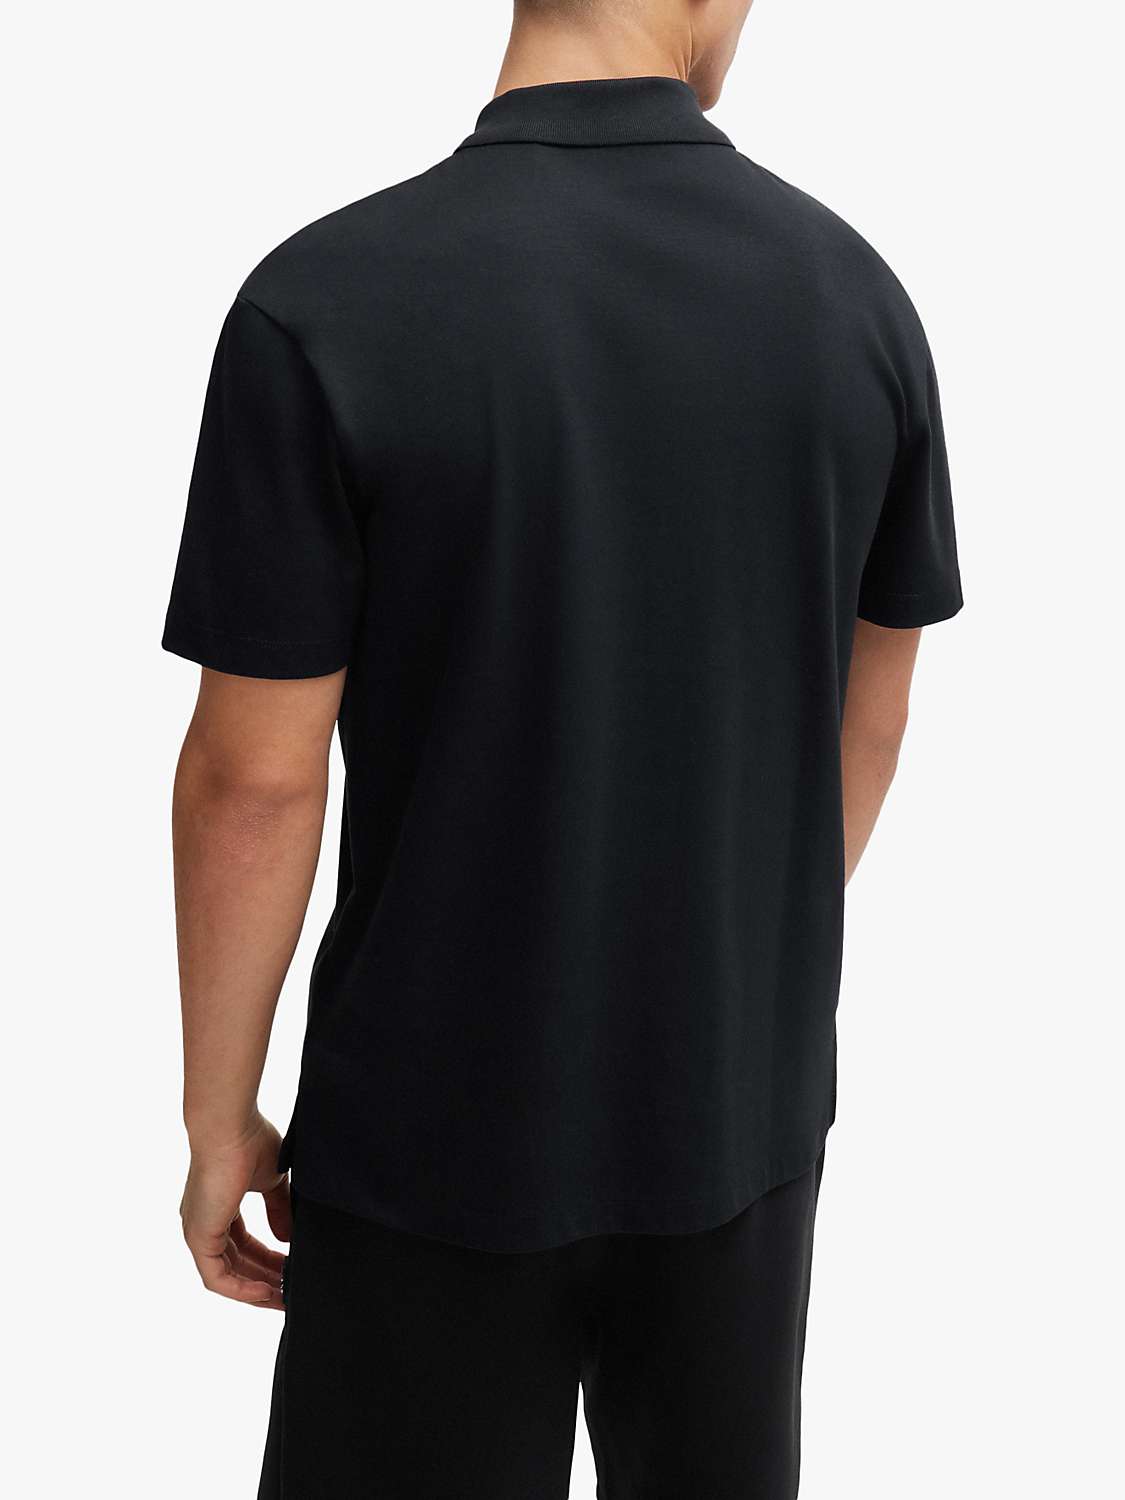 Buy HUGO Domer Short Sleeve Polo Shirt, Black Online at johnlewis.com